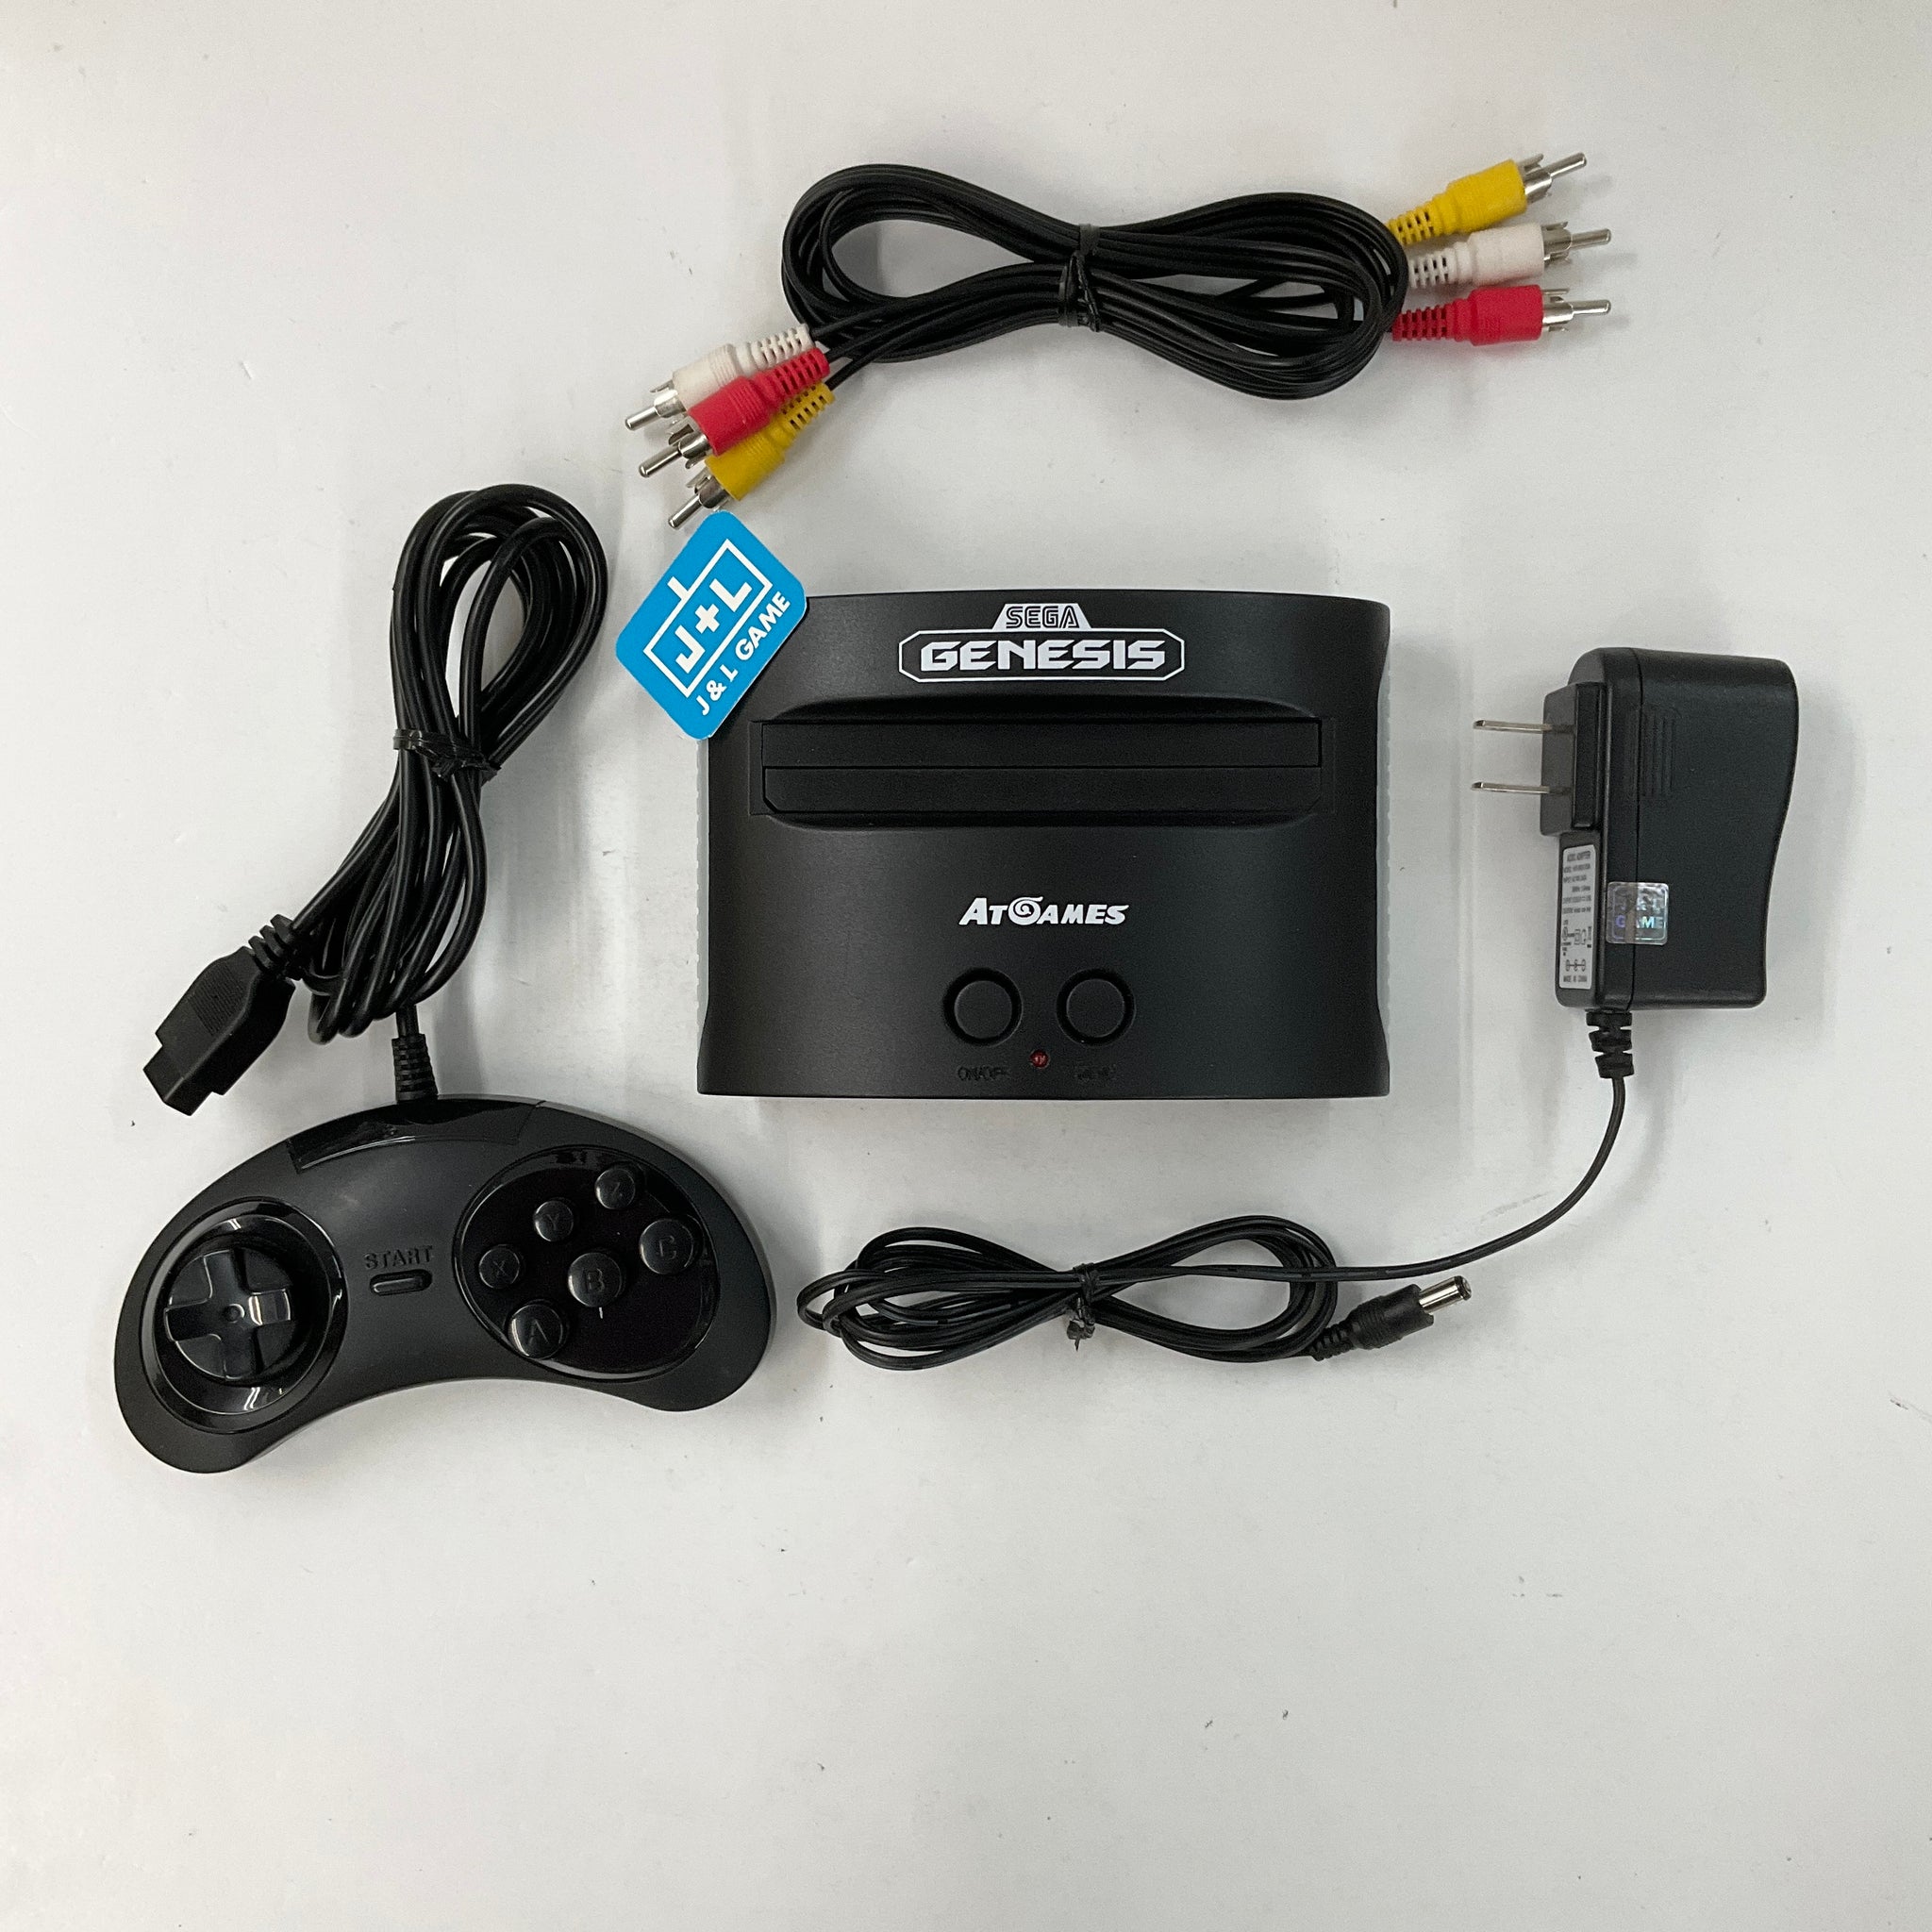 SONY PlayStation 5 Digital Edition Console ( Model CFI-1215B ) - (PS5) –  J&L Video Games New York City